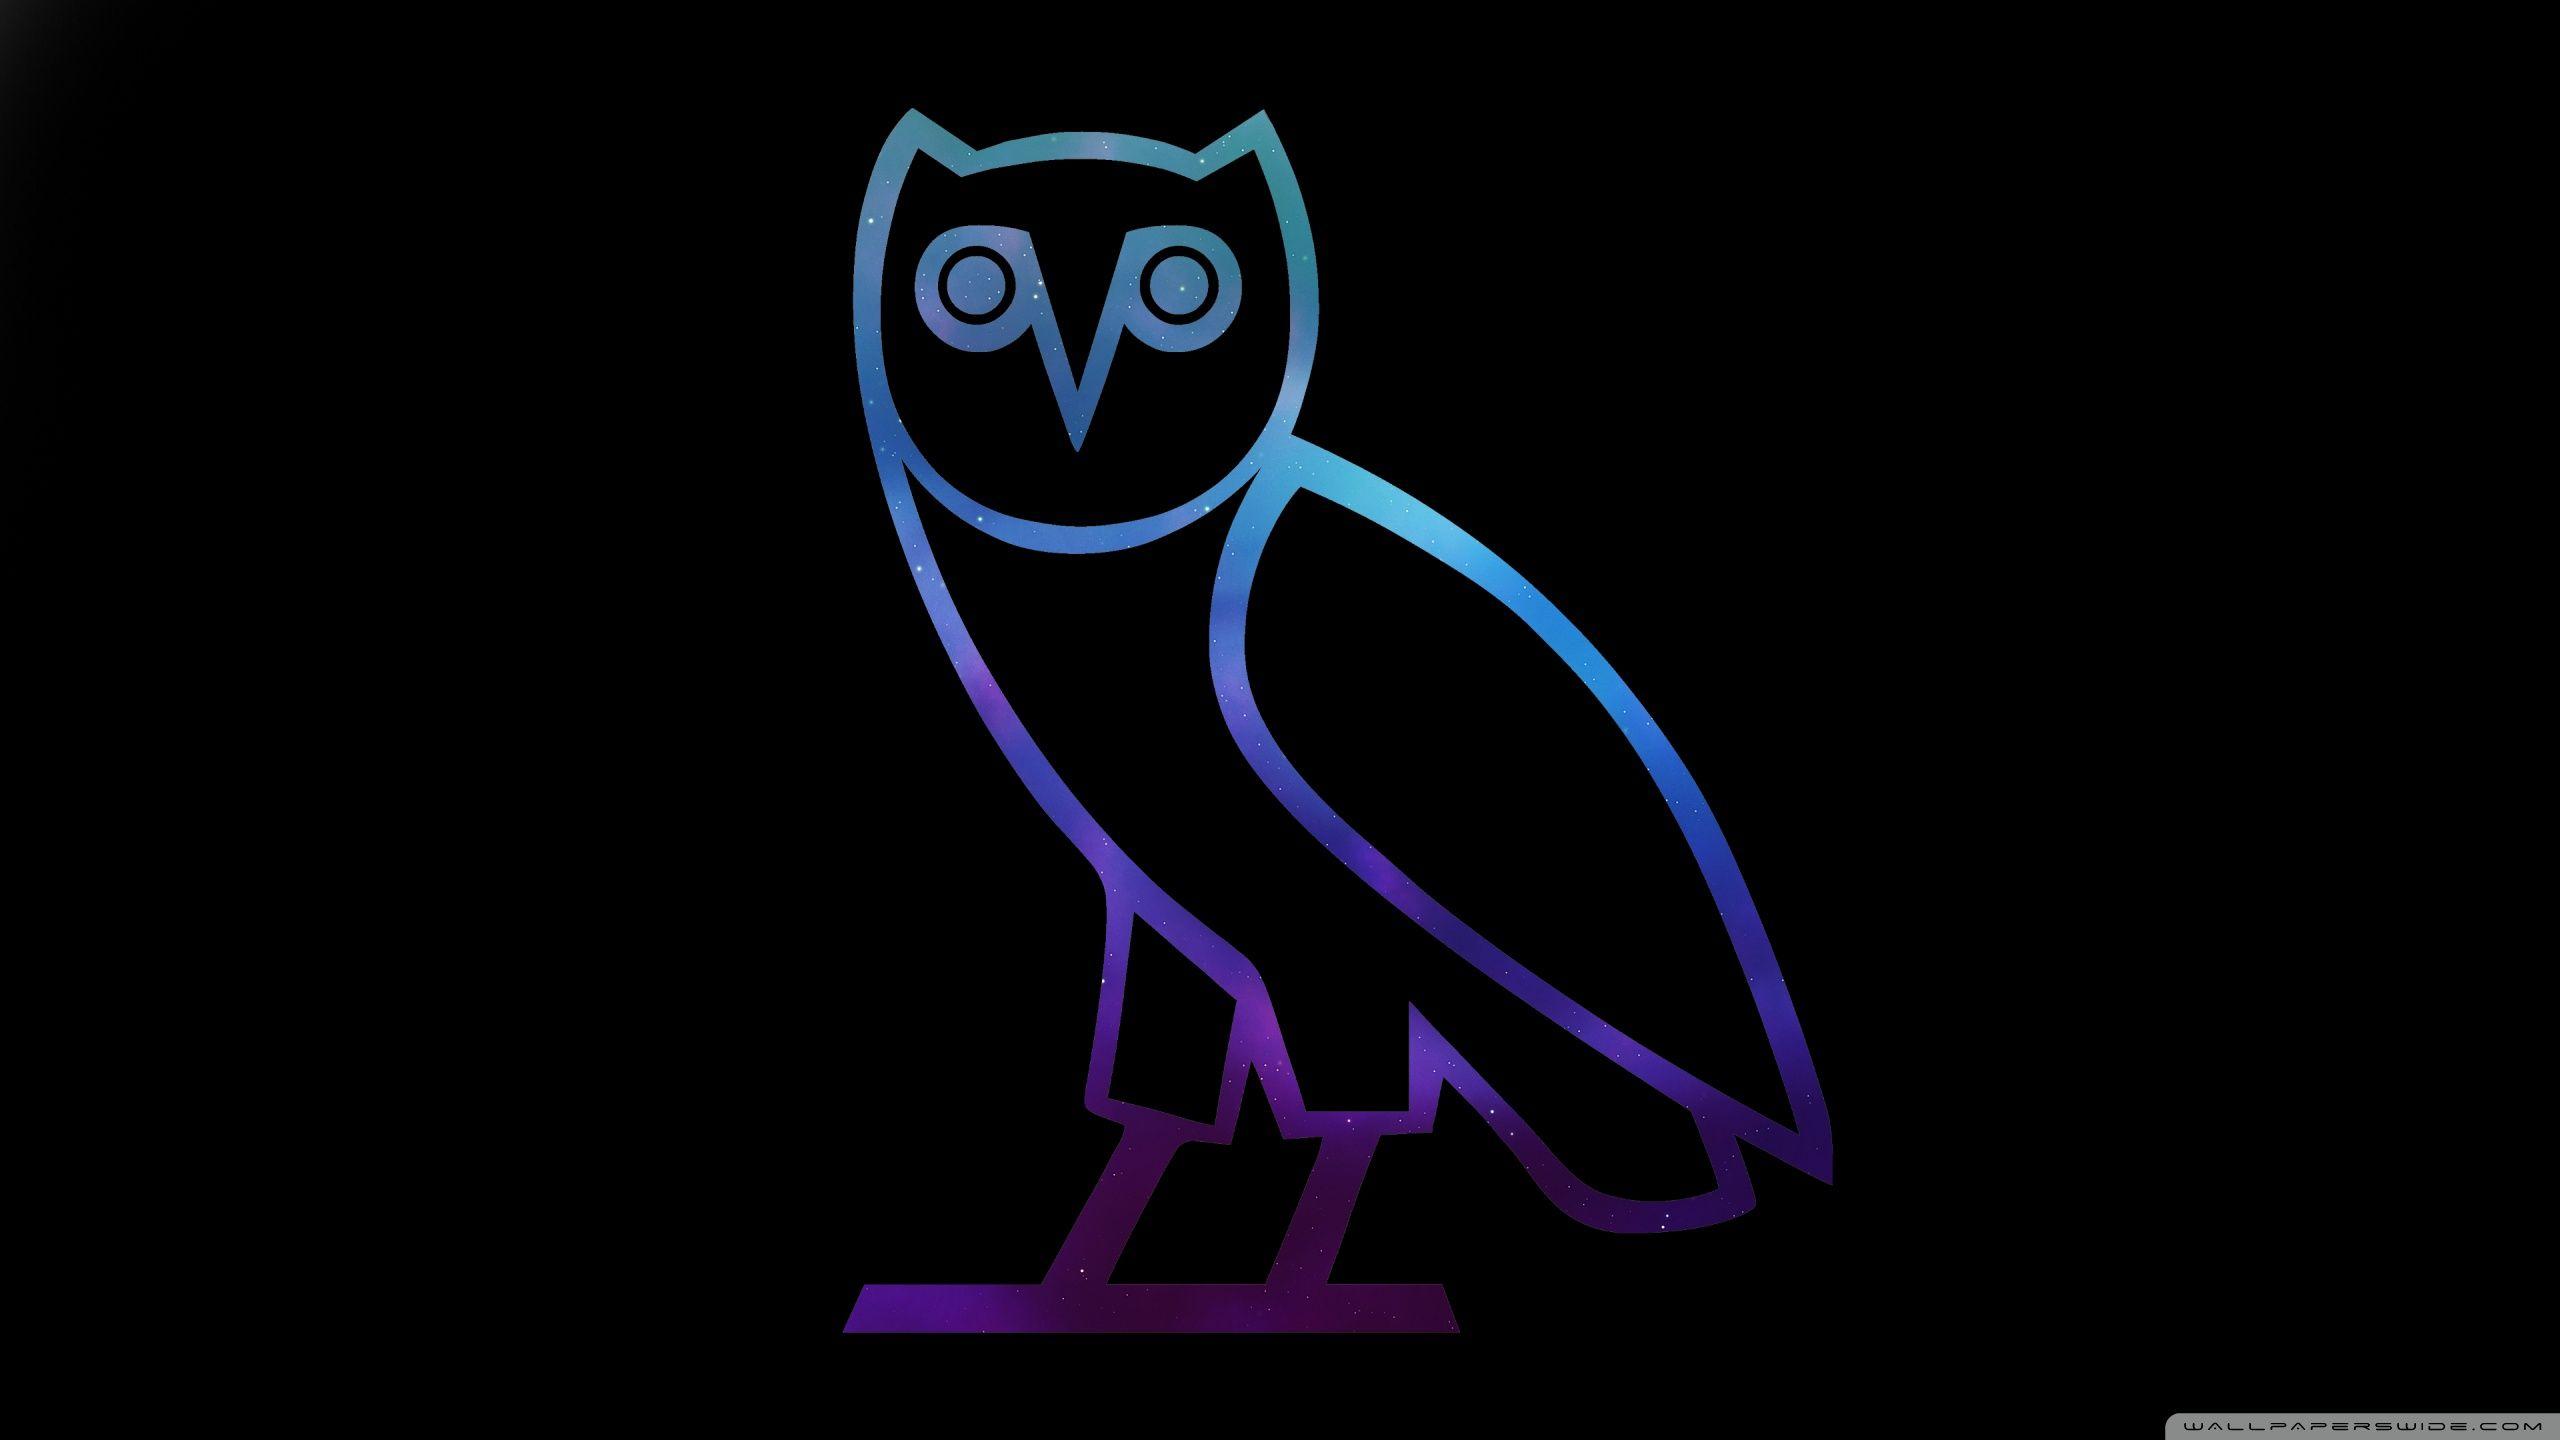 Drake Owl Ovo HD desktop wallpaper, Widescreen, Fullscreen. Ovo